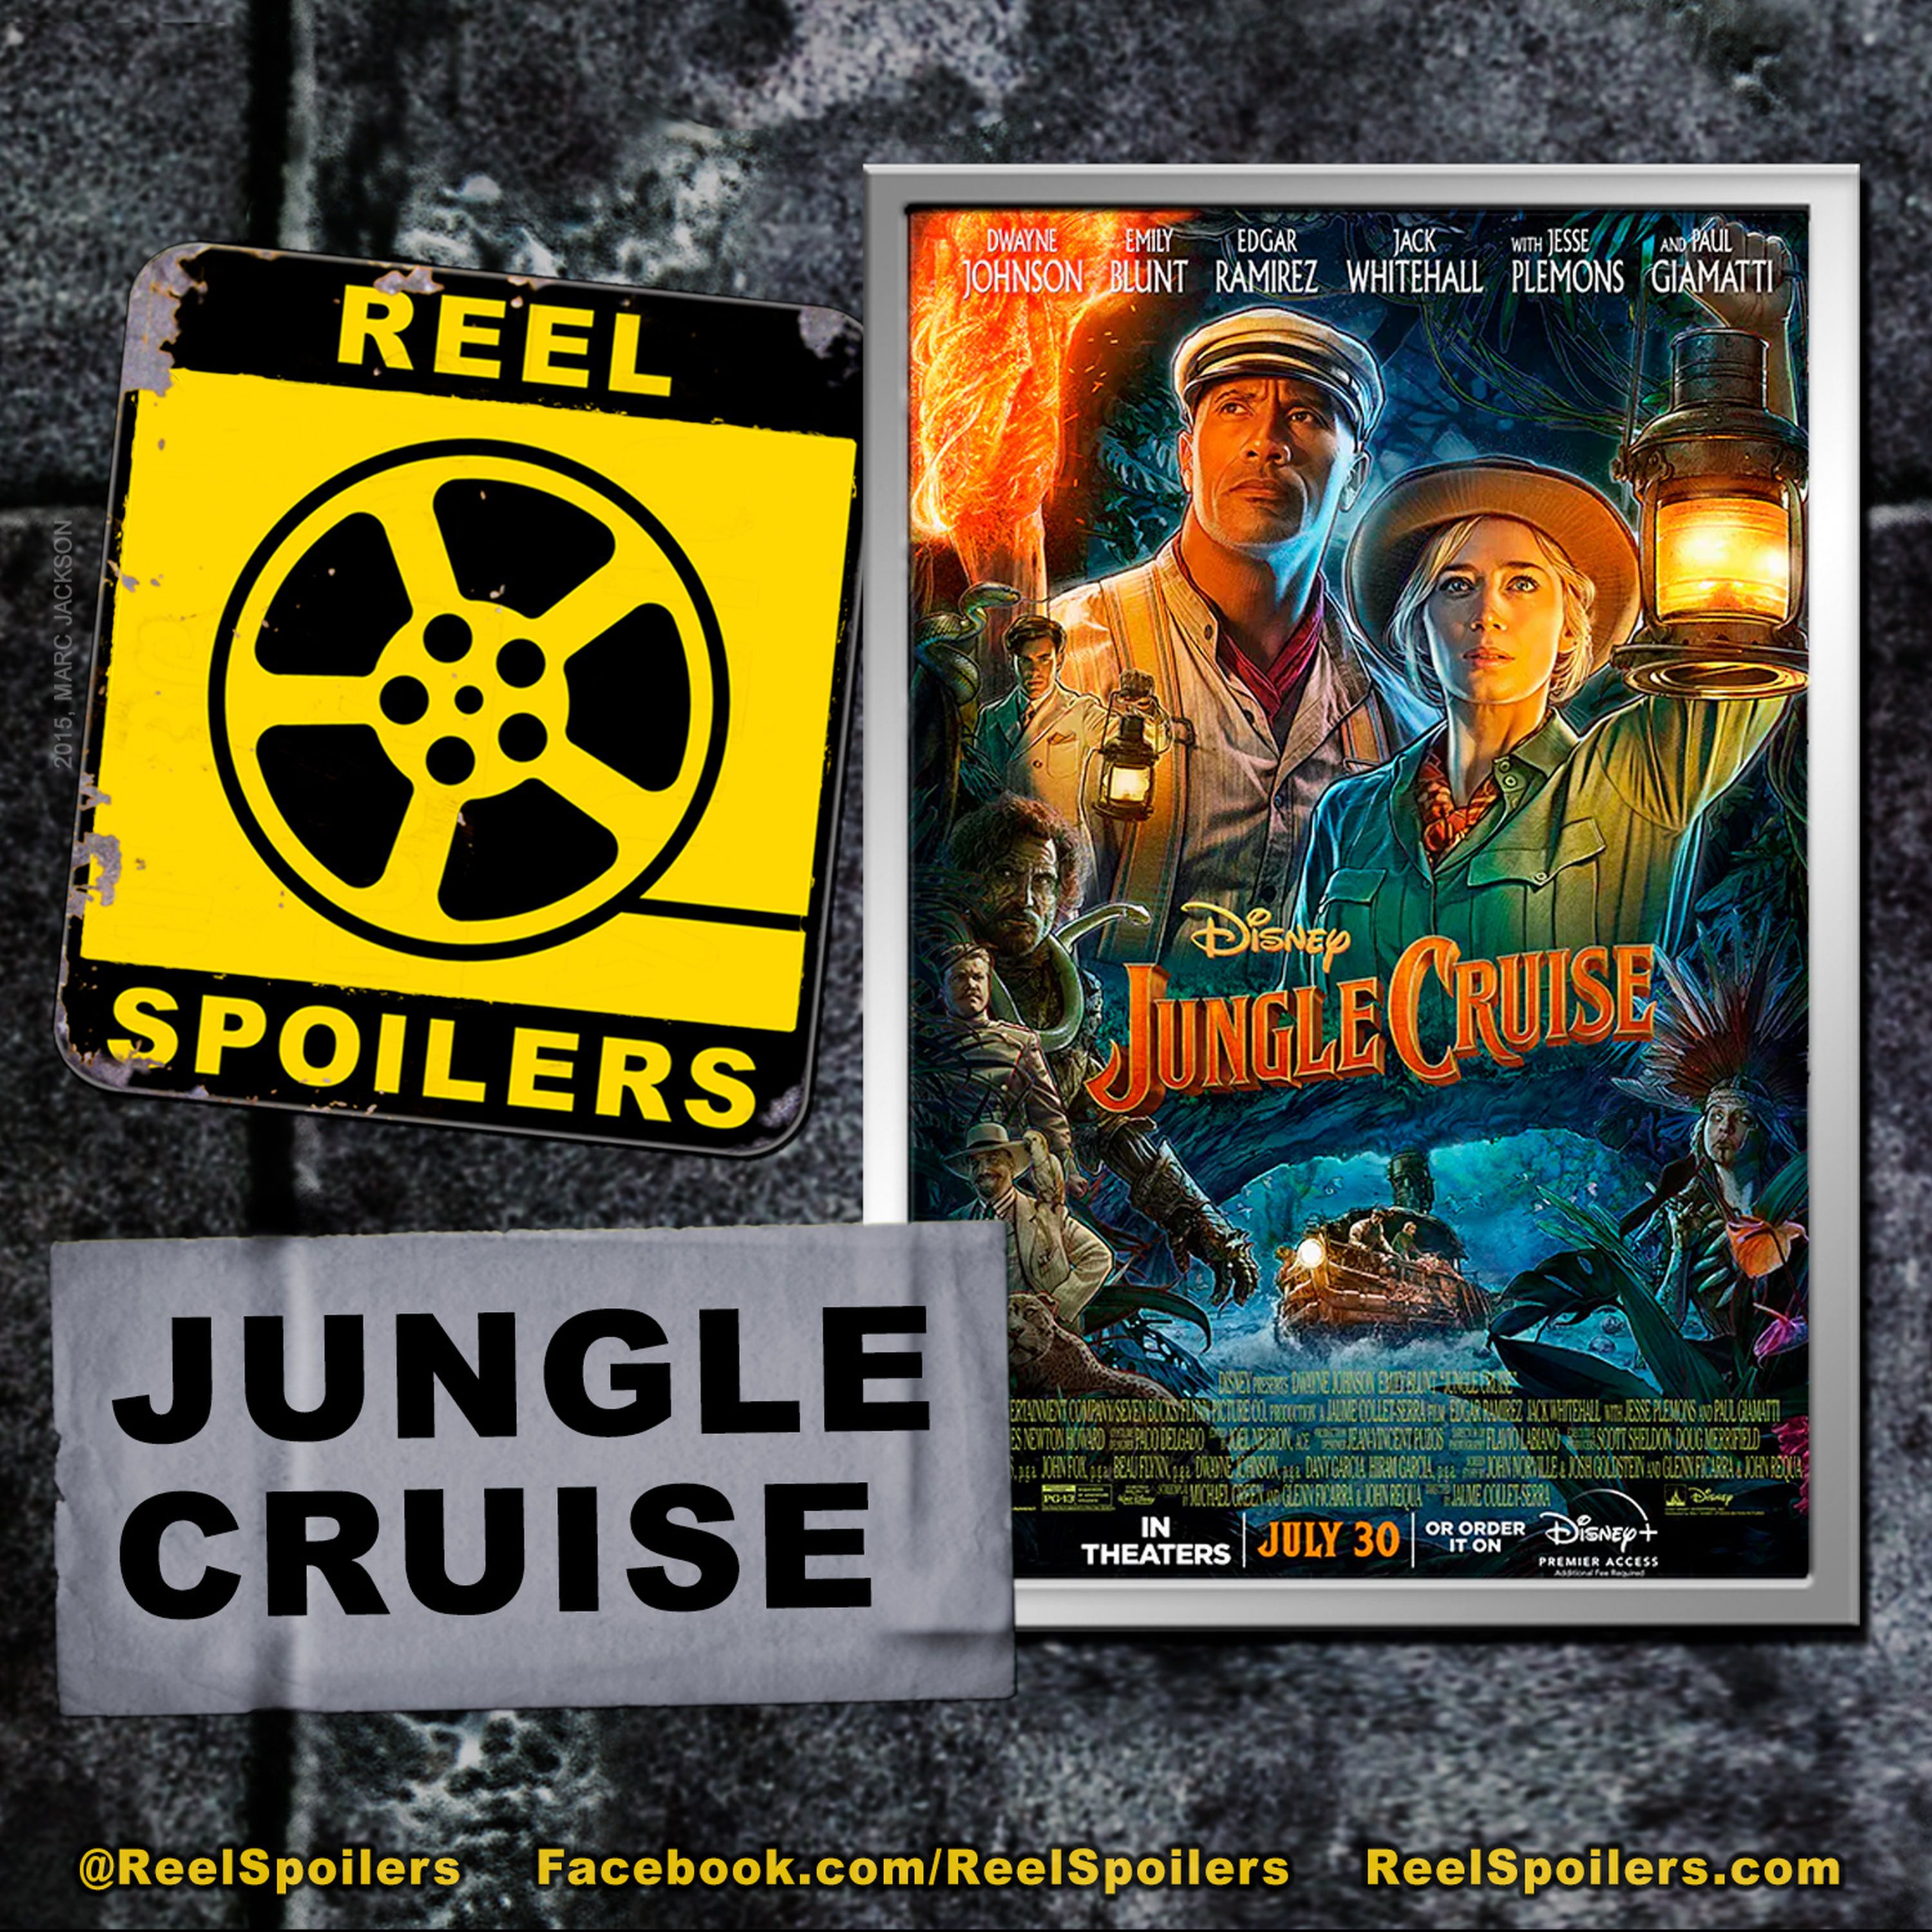 Disney's JUNGLE CRUISE Starring Dwayne "The Rock" Johnson, Emily Blunt, Jack Whitehall Image